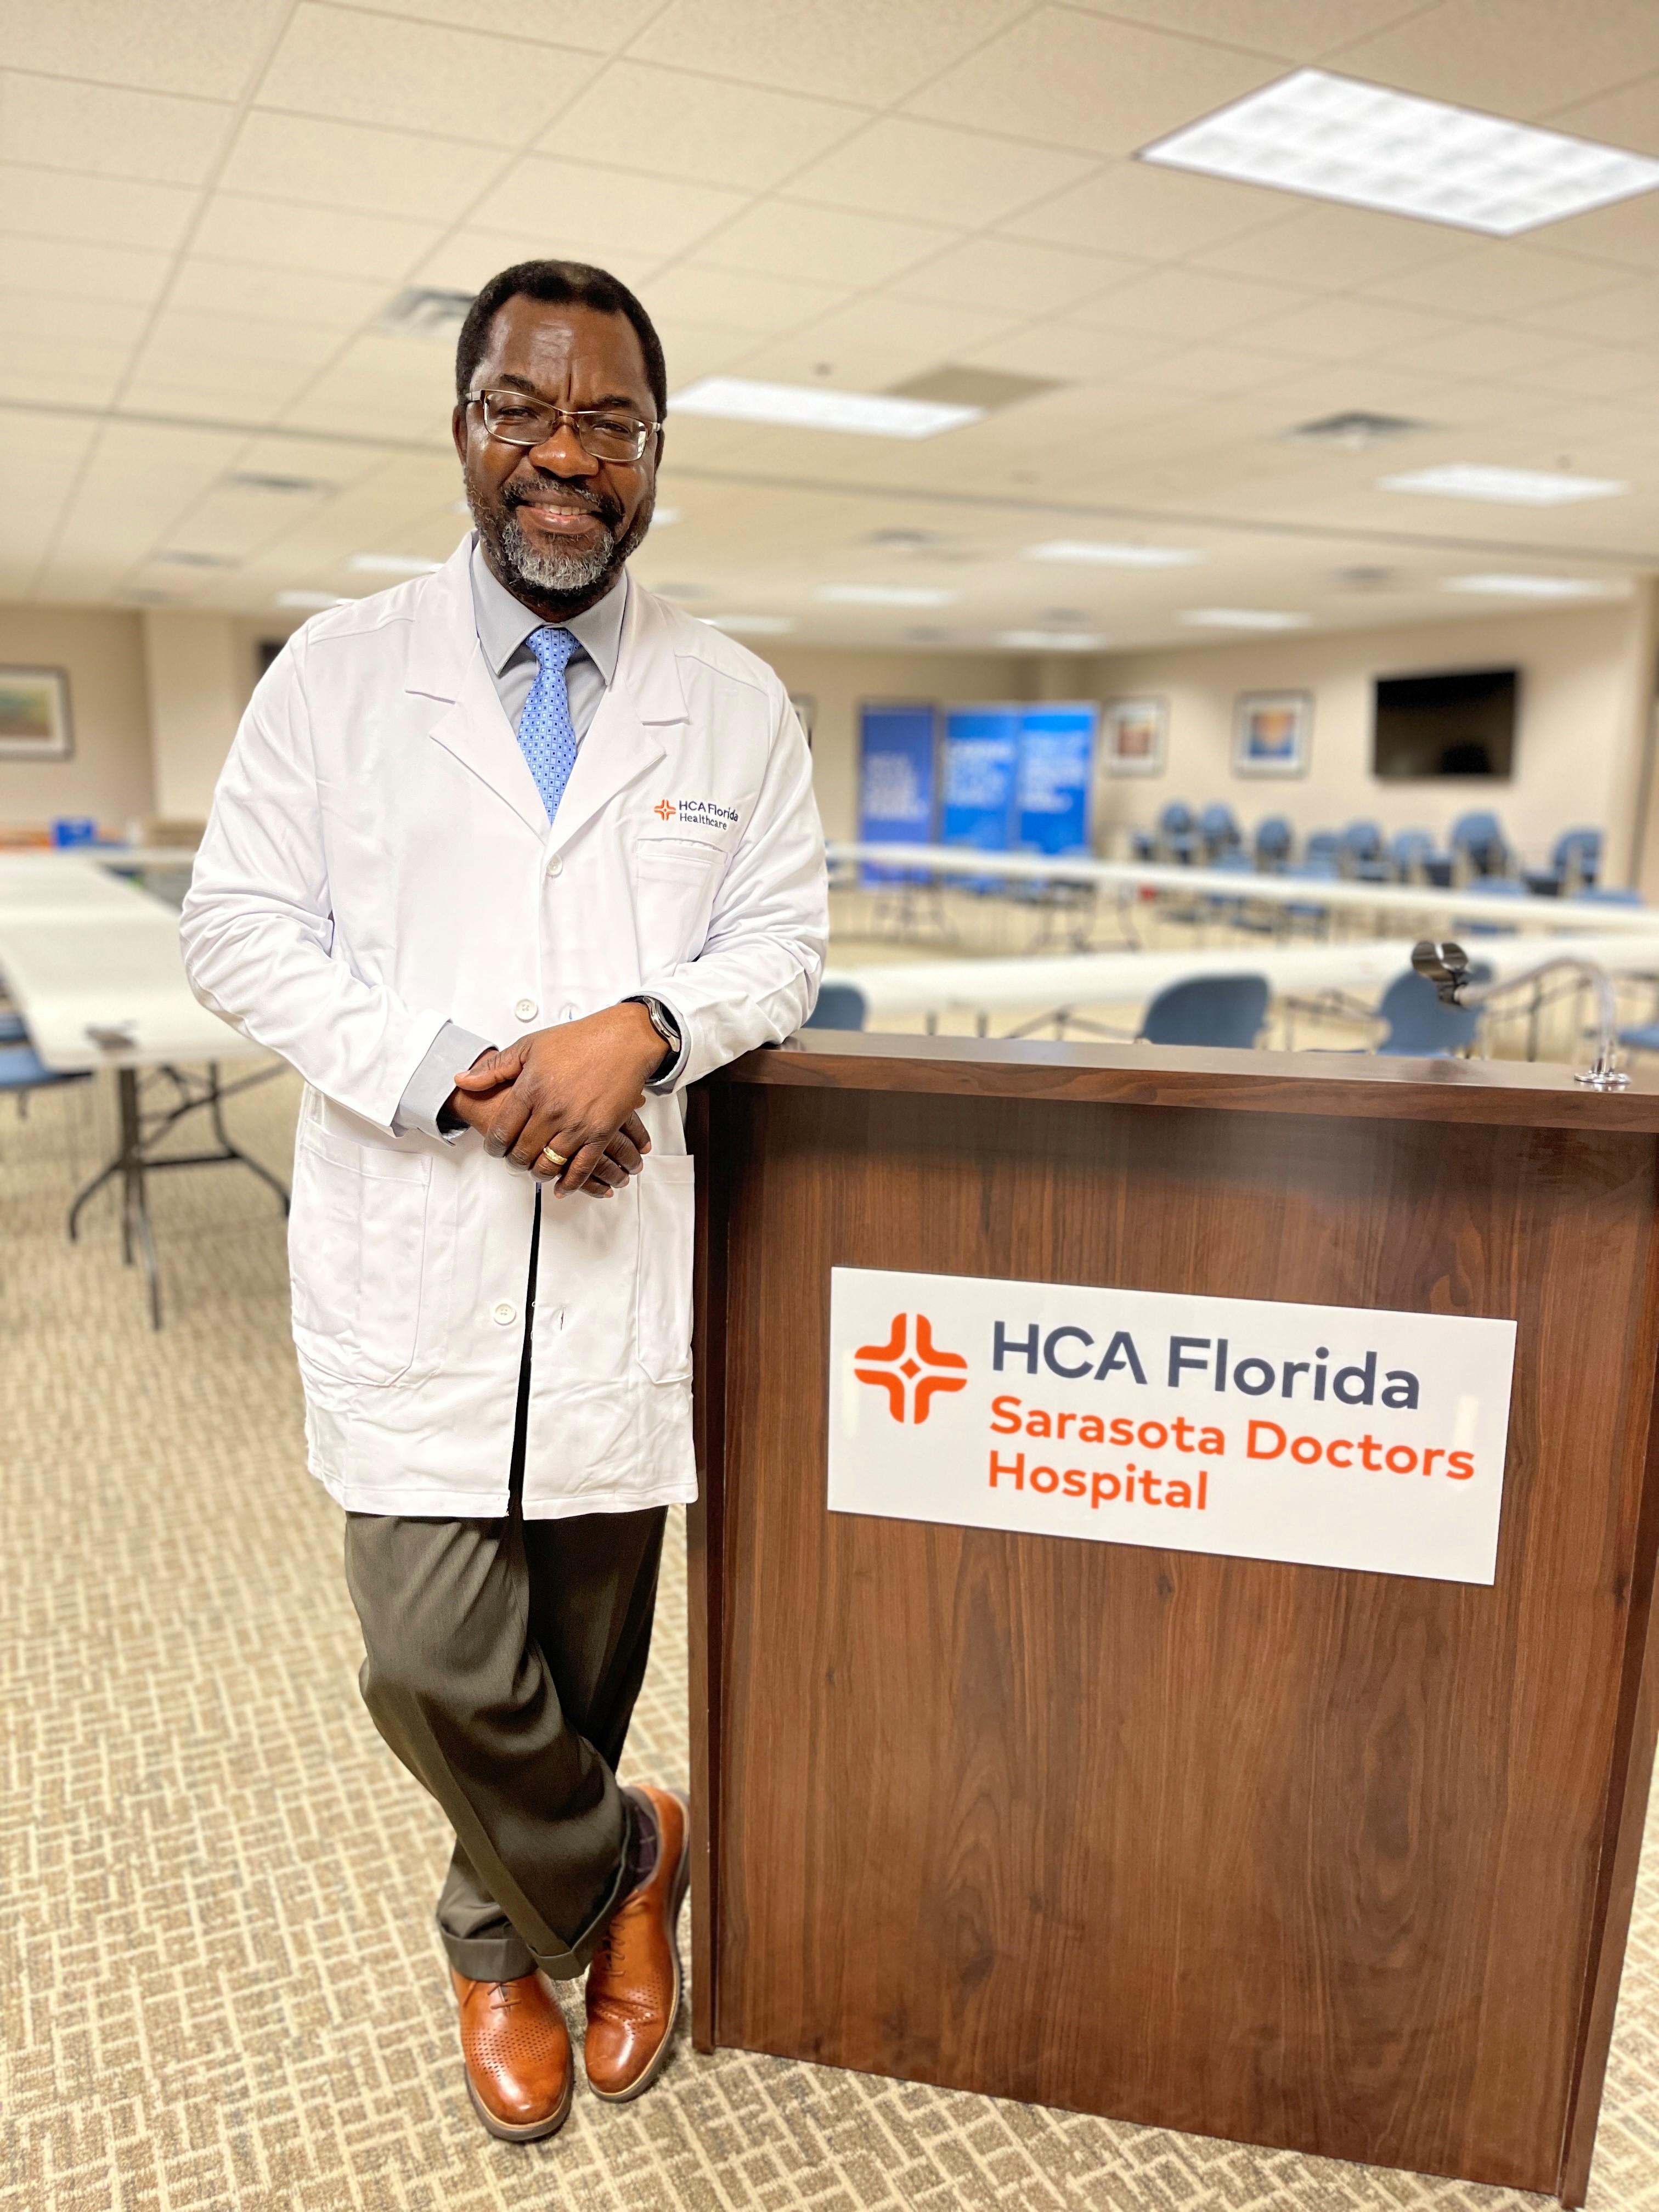 Michael Schandorf-Lartey MD in meeting room at HCA Florida Sarasota Doctor's Hospital.